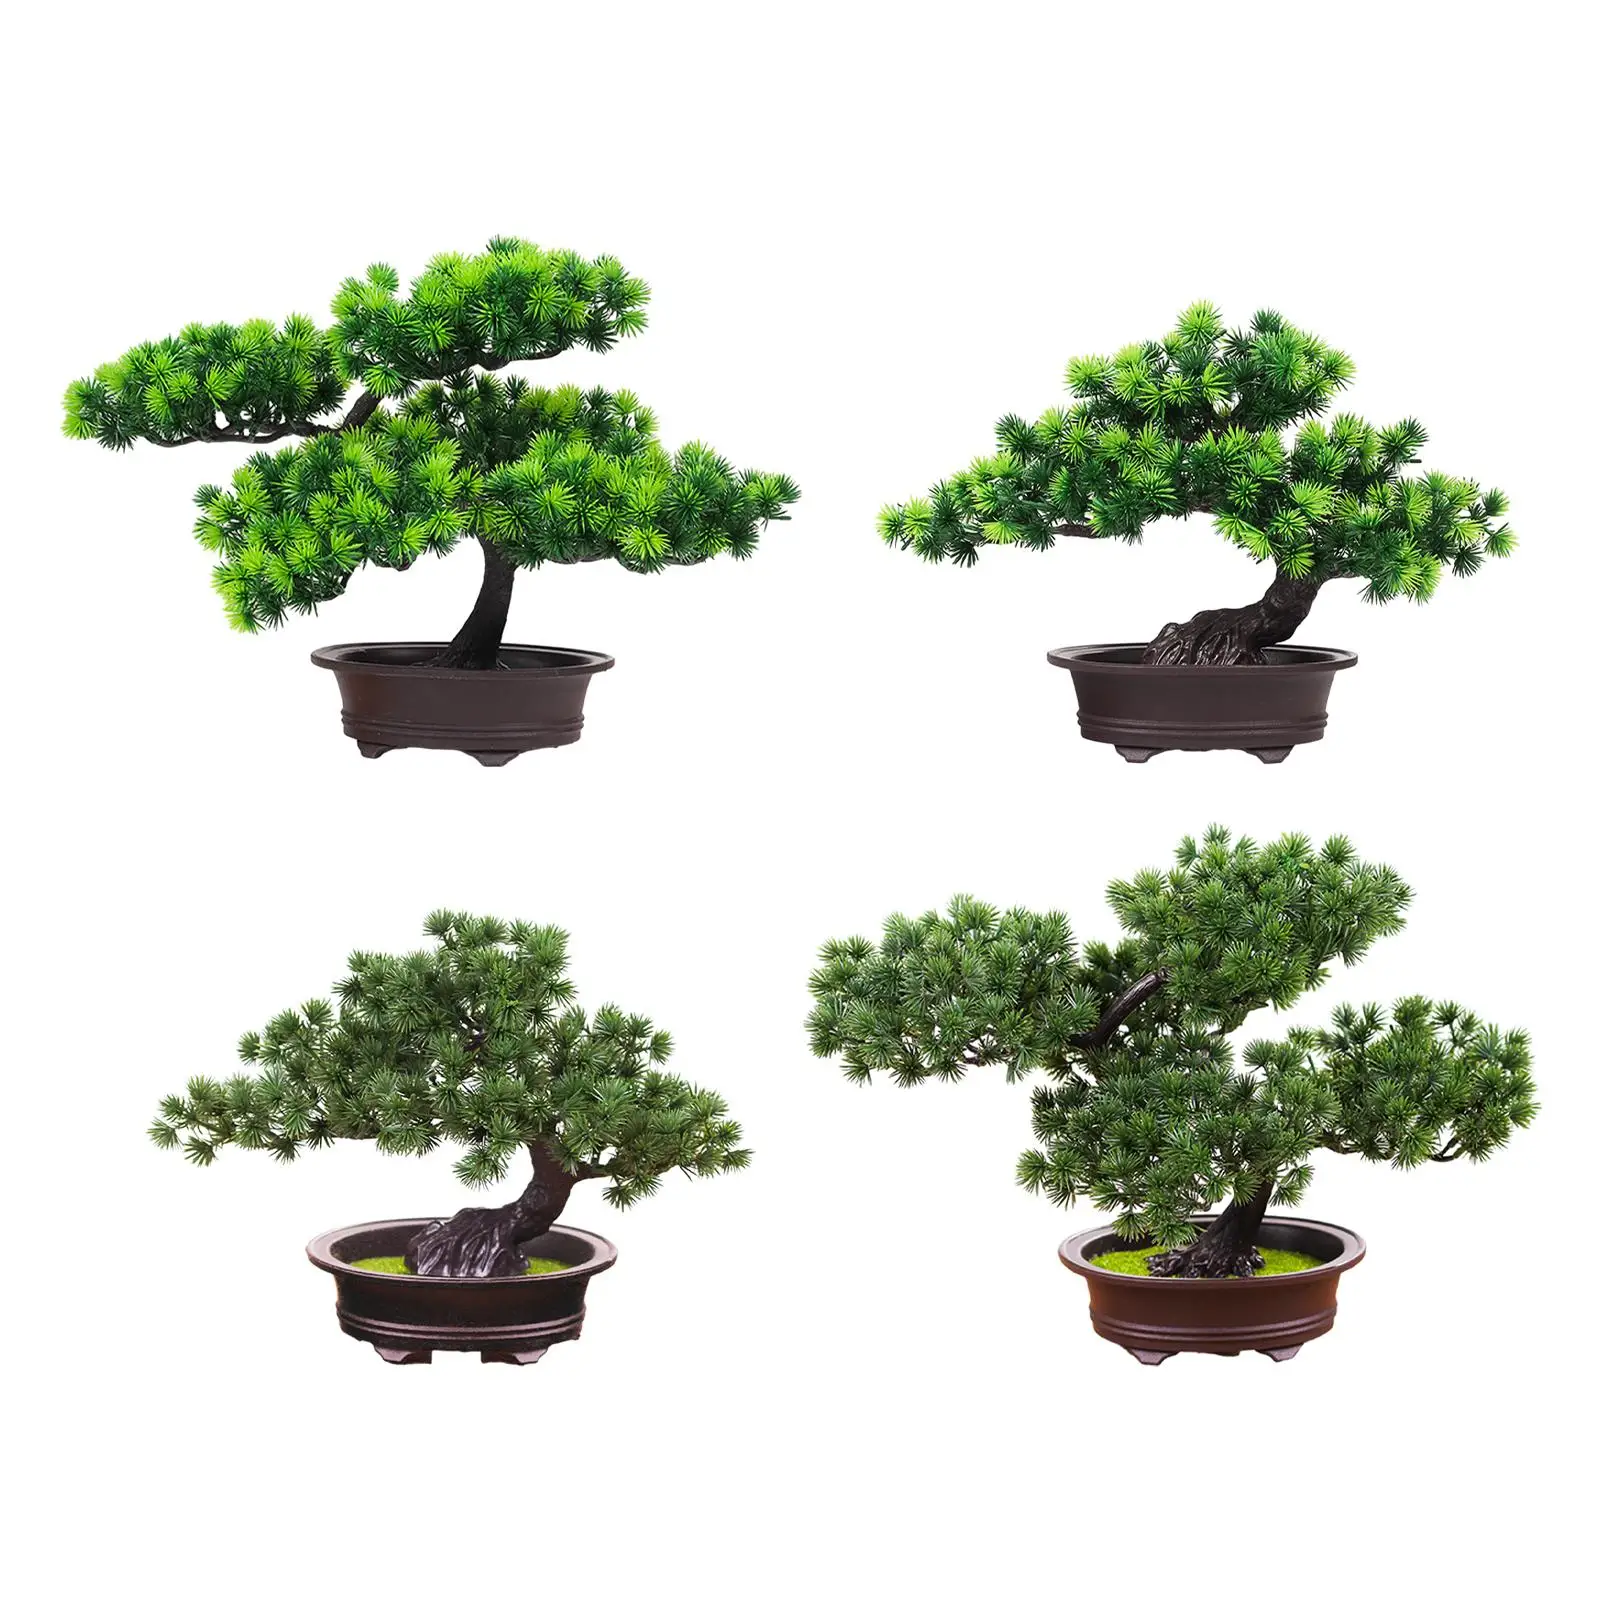 Artificial Bonsai Decor Pine Tree House Plants Desk Ornament for Home Garden